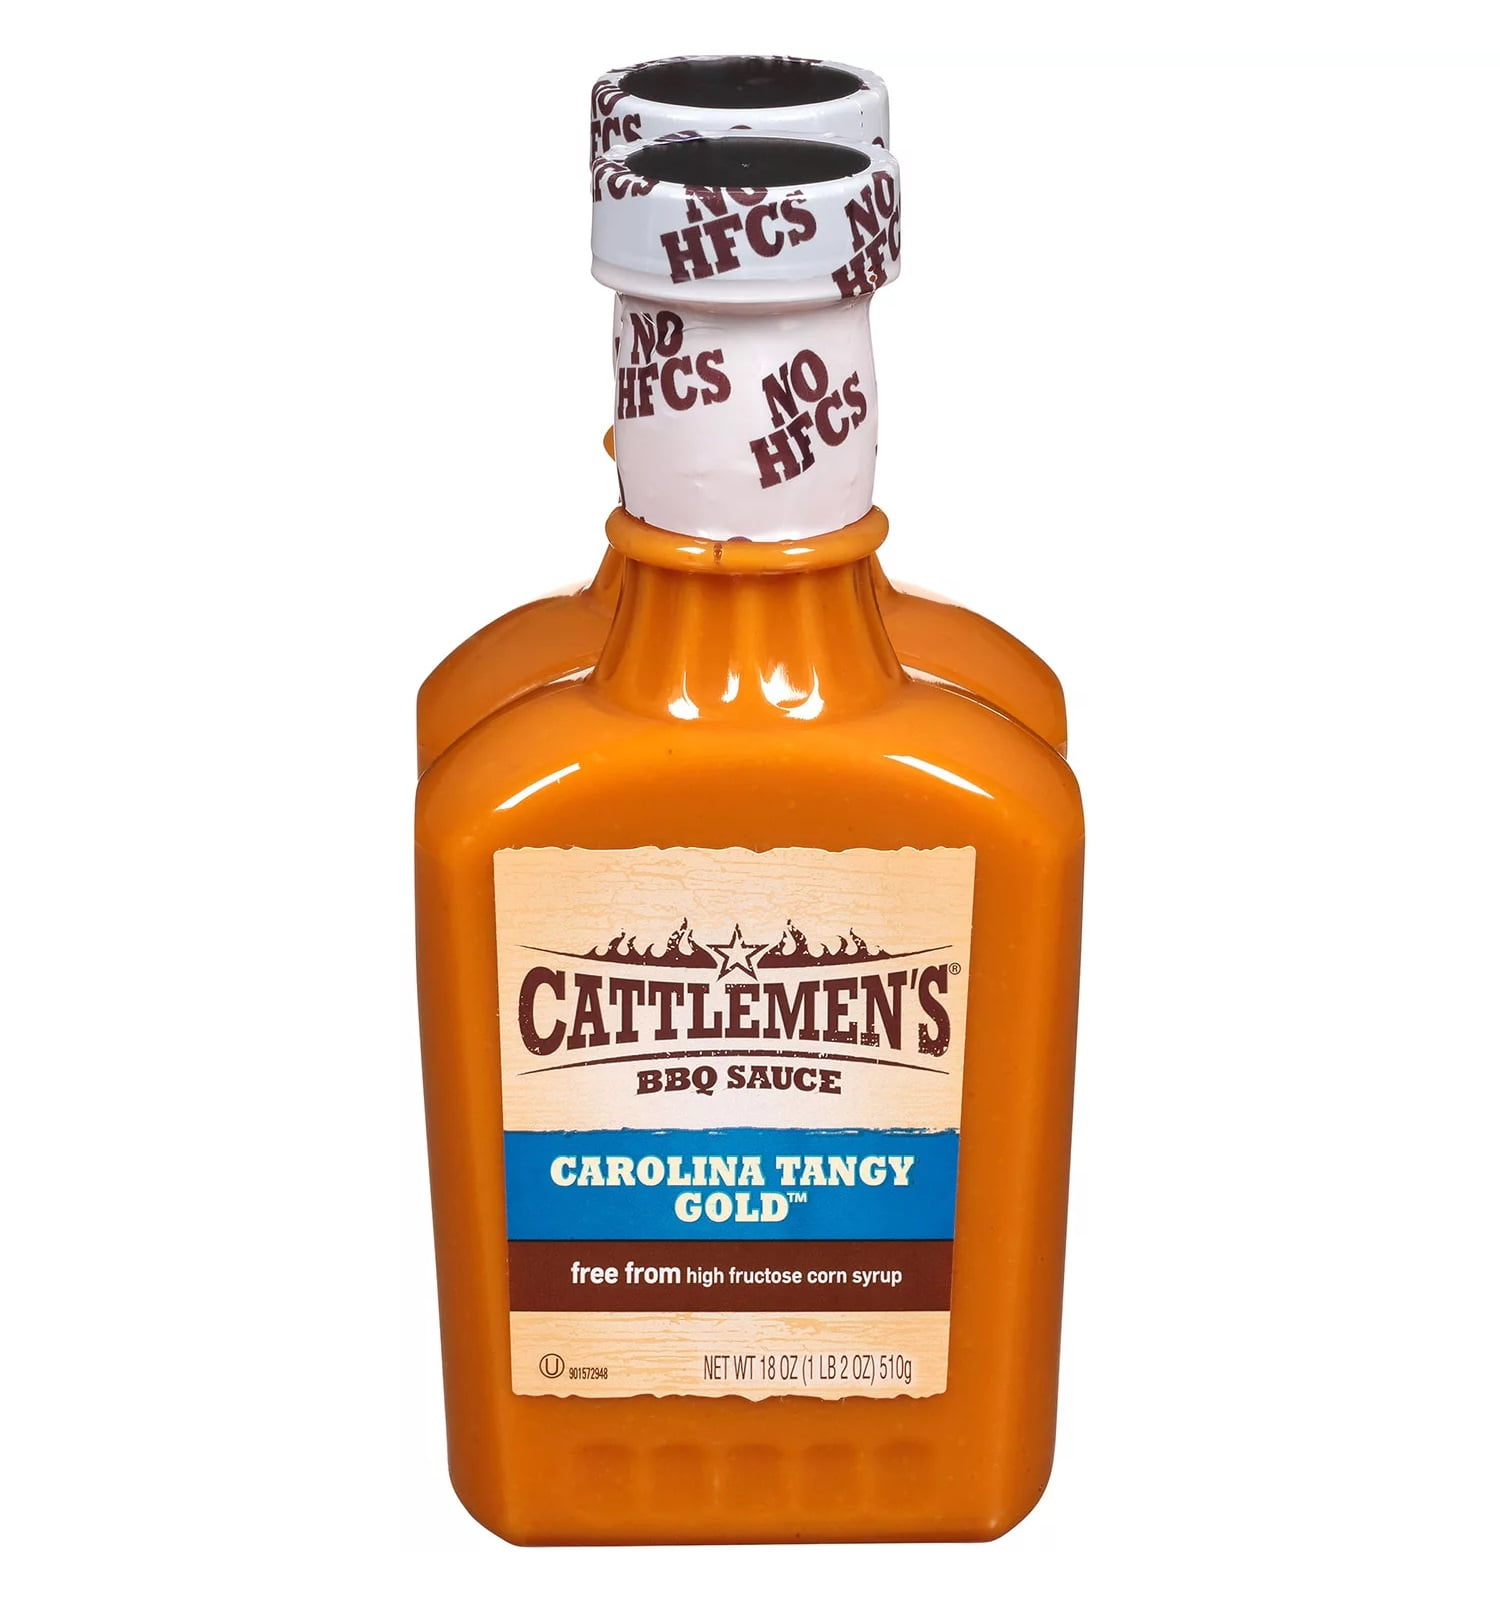 CattleBoyZ BBQ Sauce & Seasonings Review & Giveaway